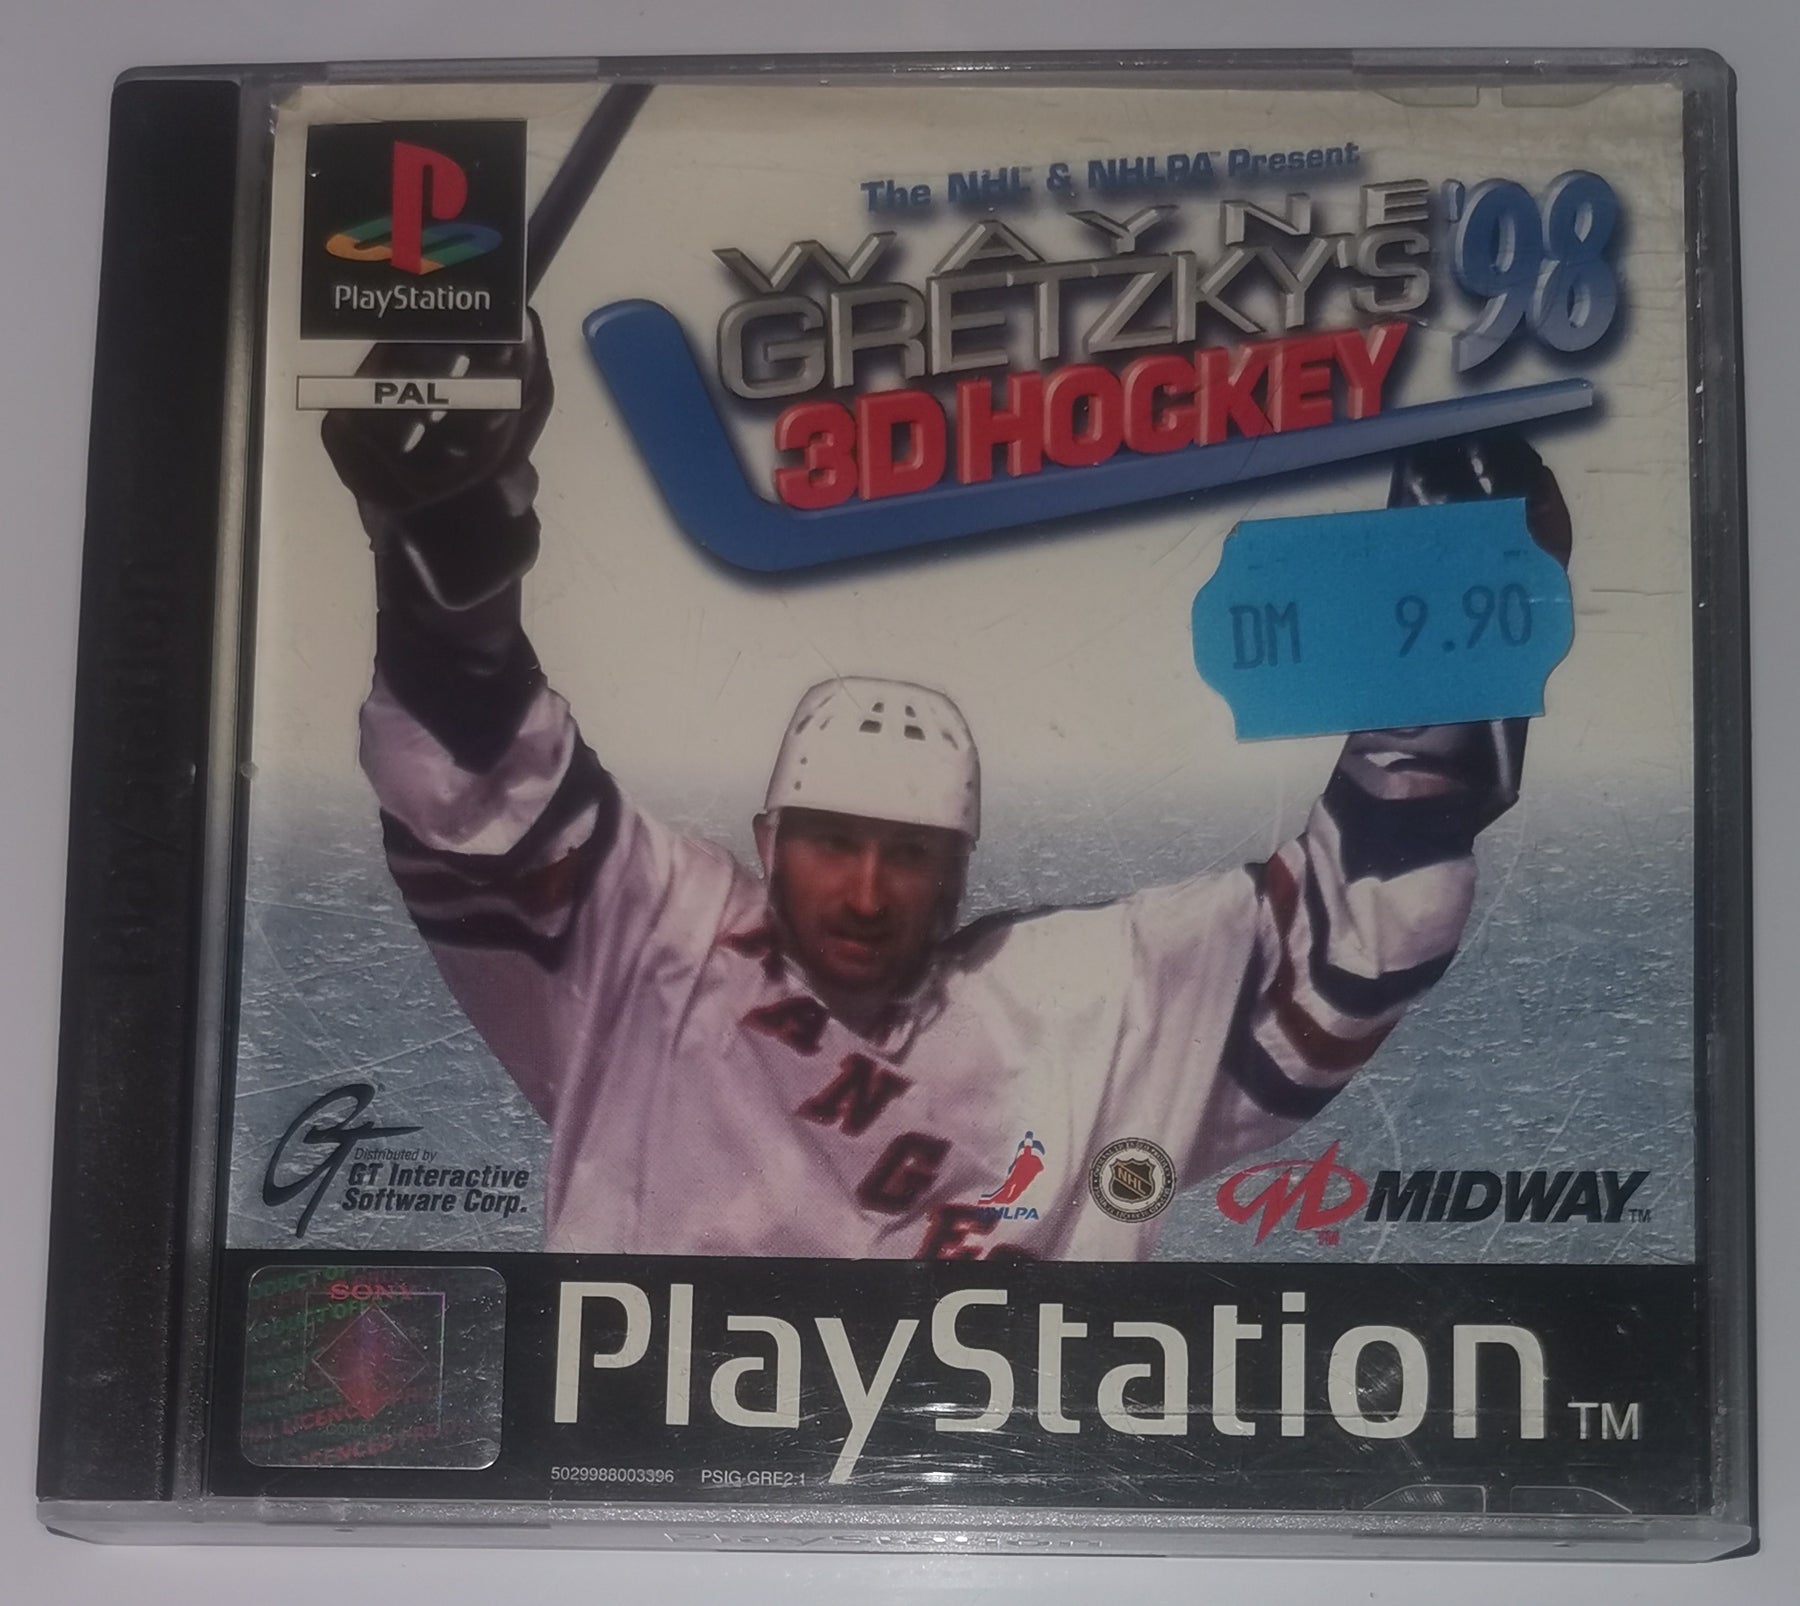 Wayne Gretzky 3D Hockey 98 (Playstation 1) [Gut]